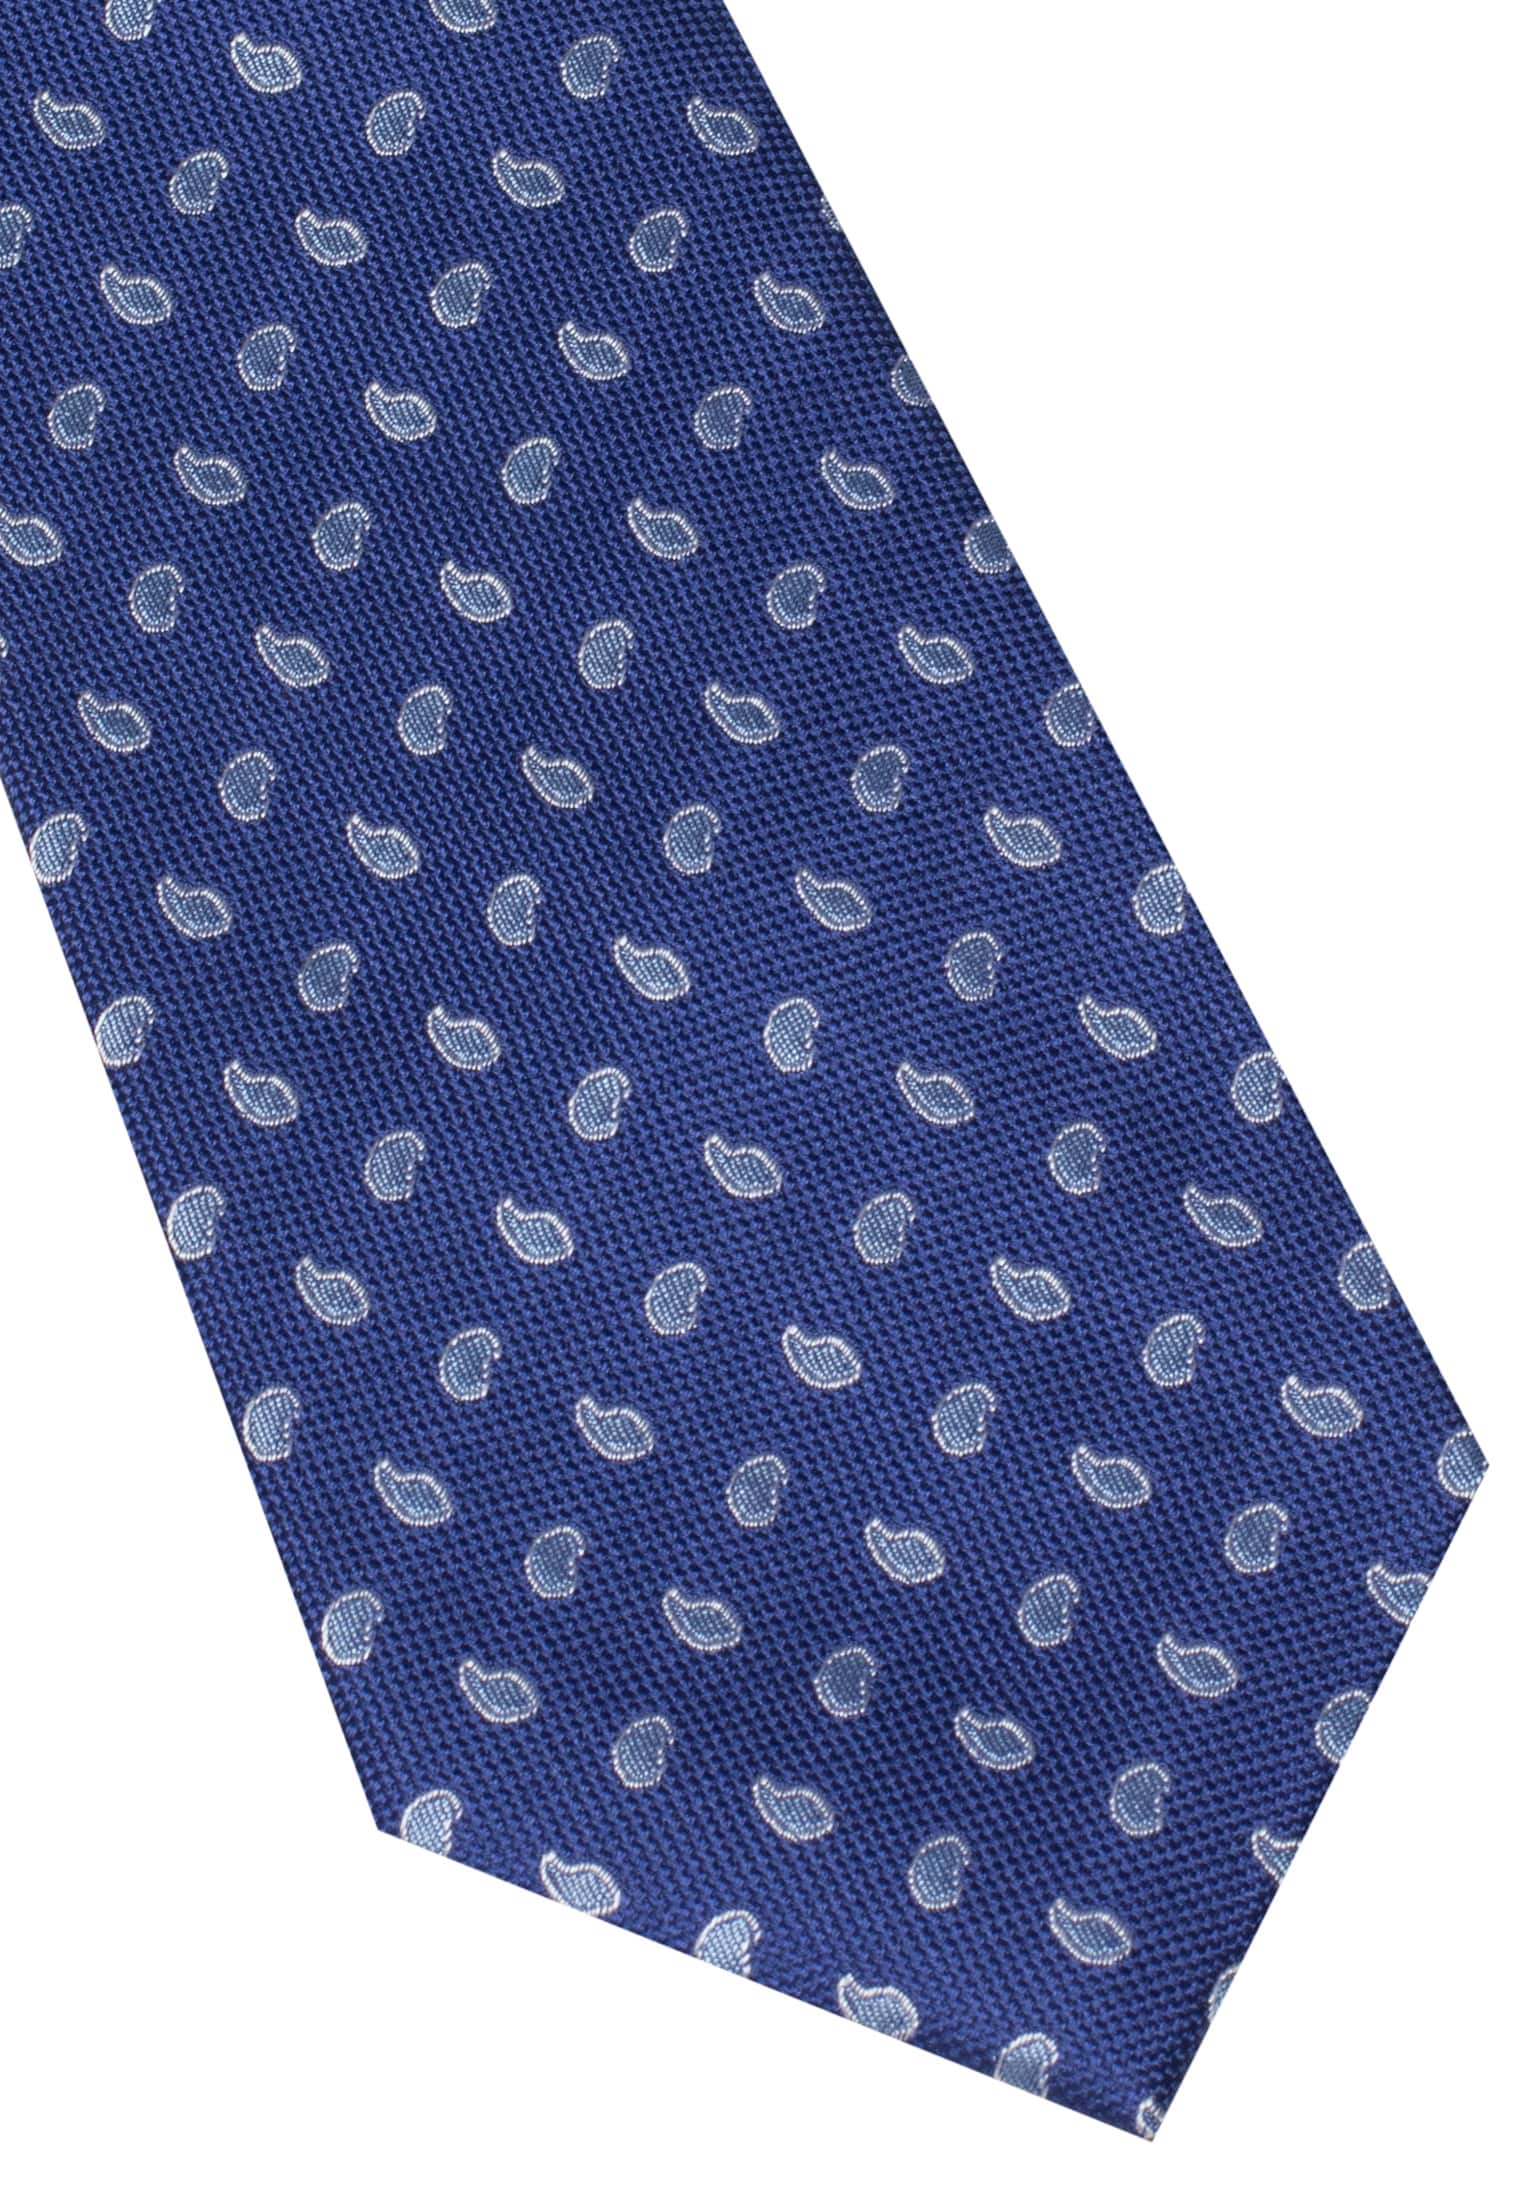 Tie in navy/blue patterned